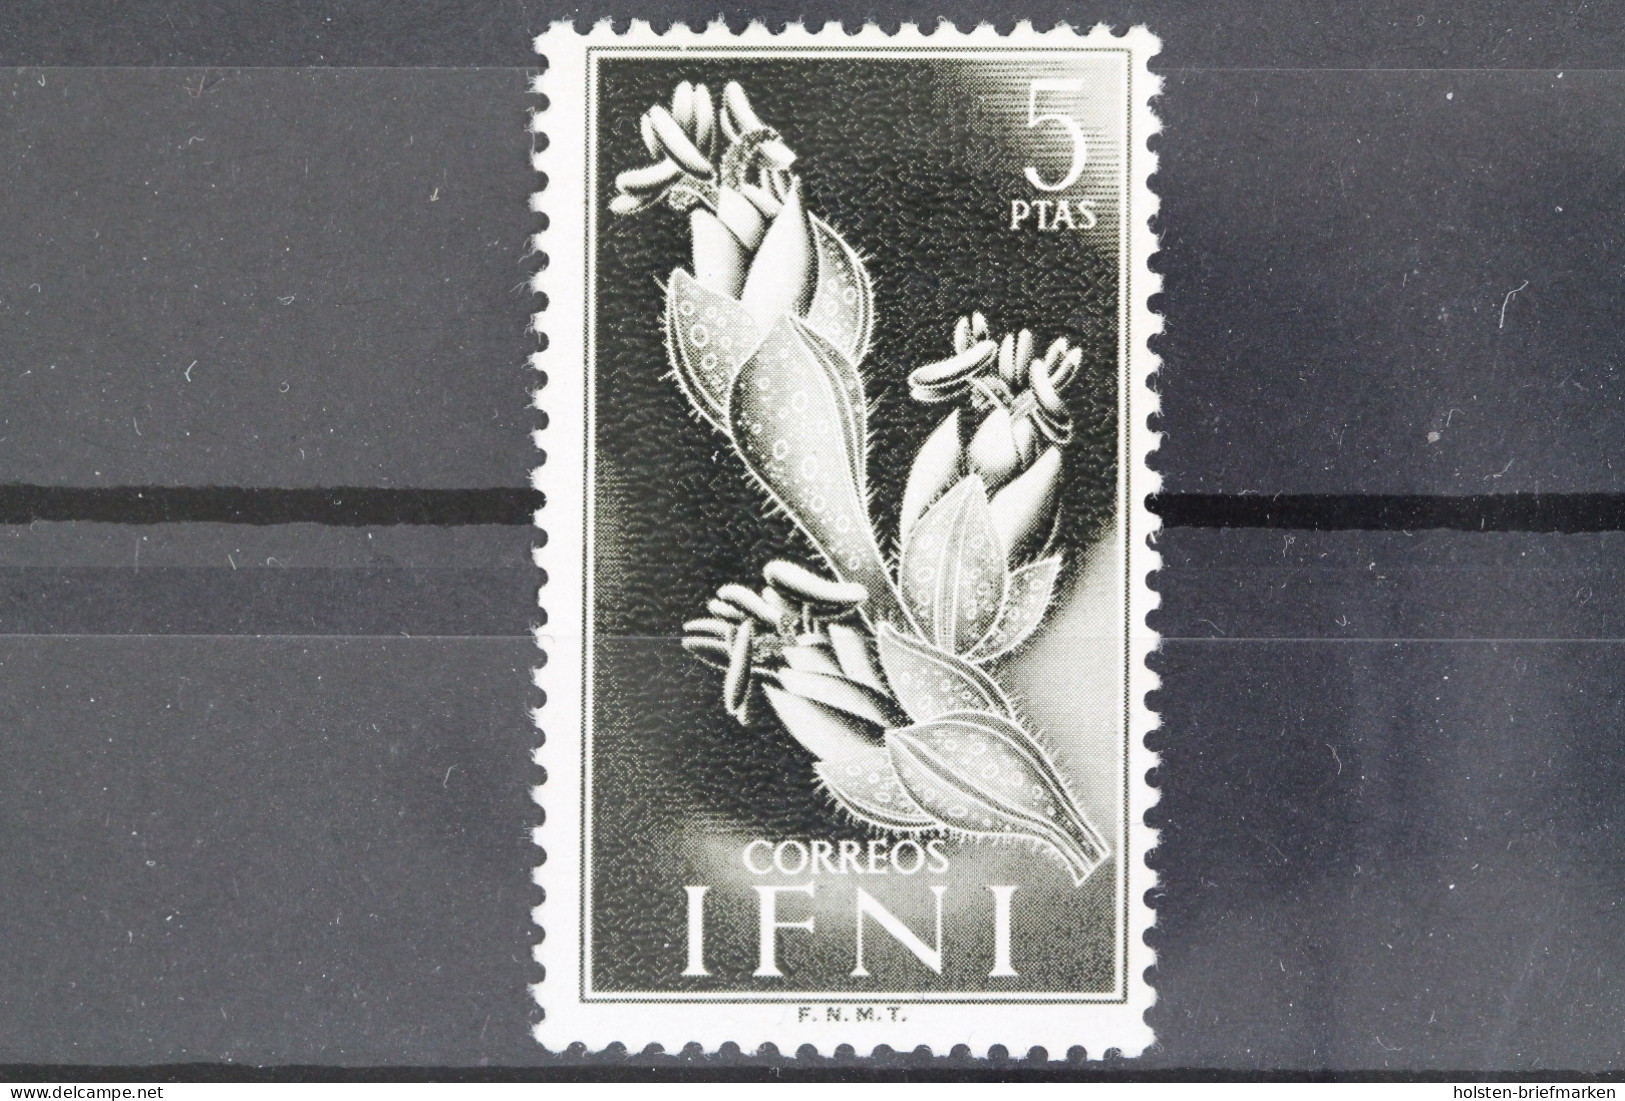 Ifni, MiNr. 142, Postfrisch - Marruecos (1956-...)